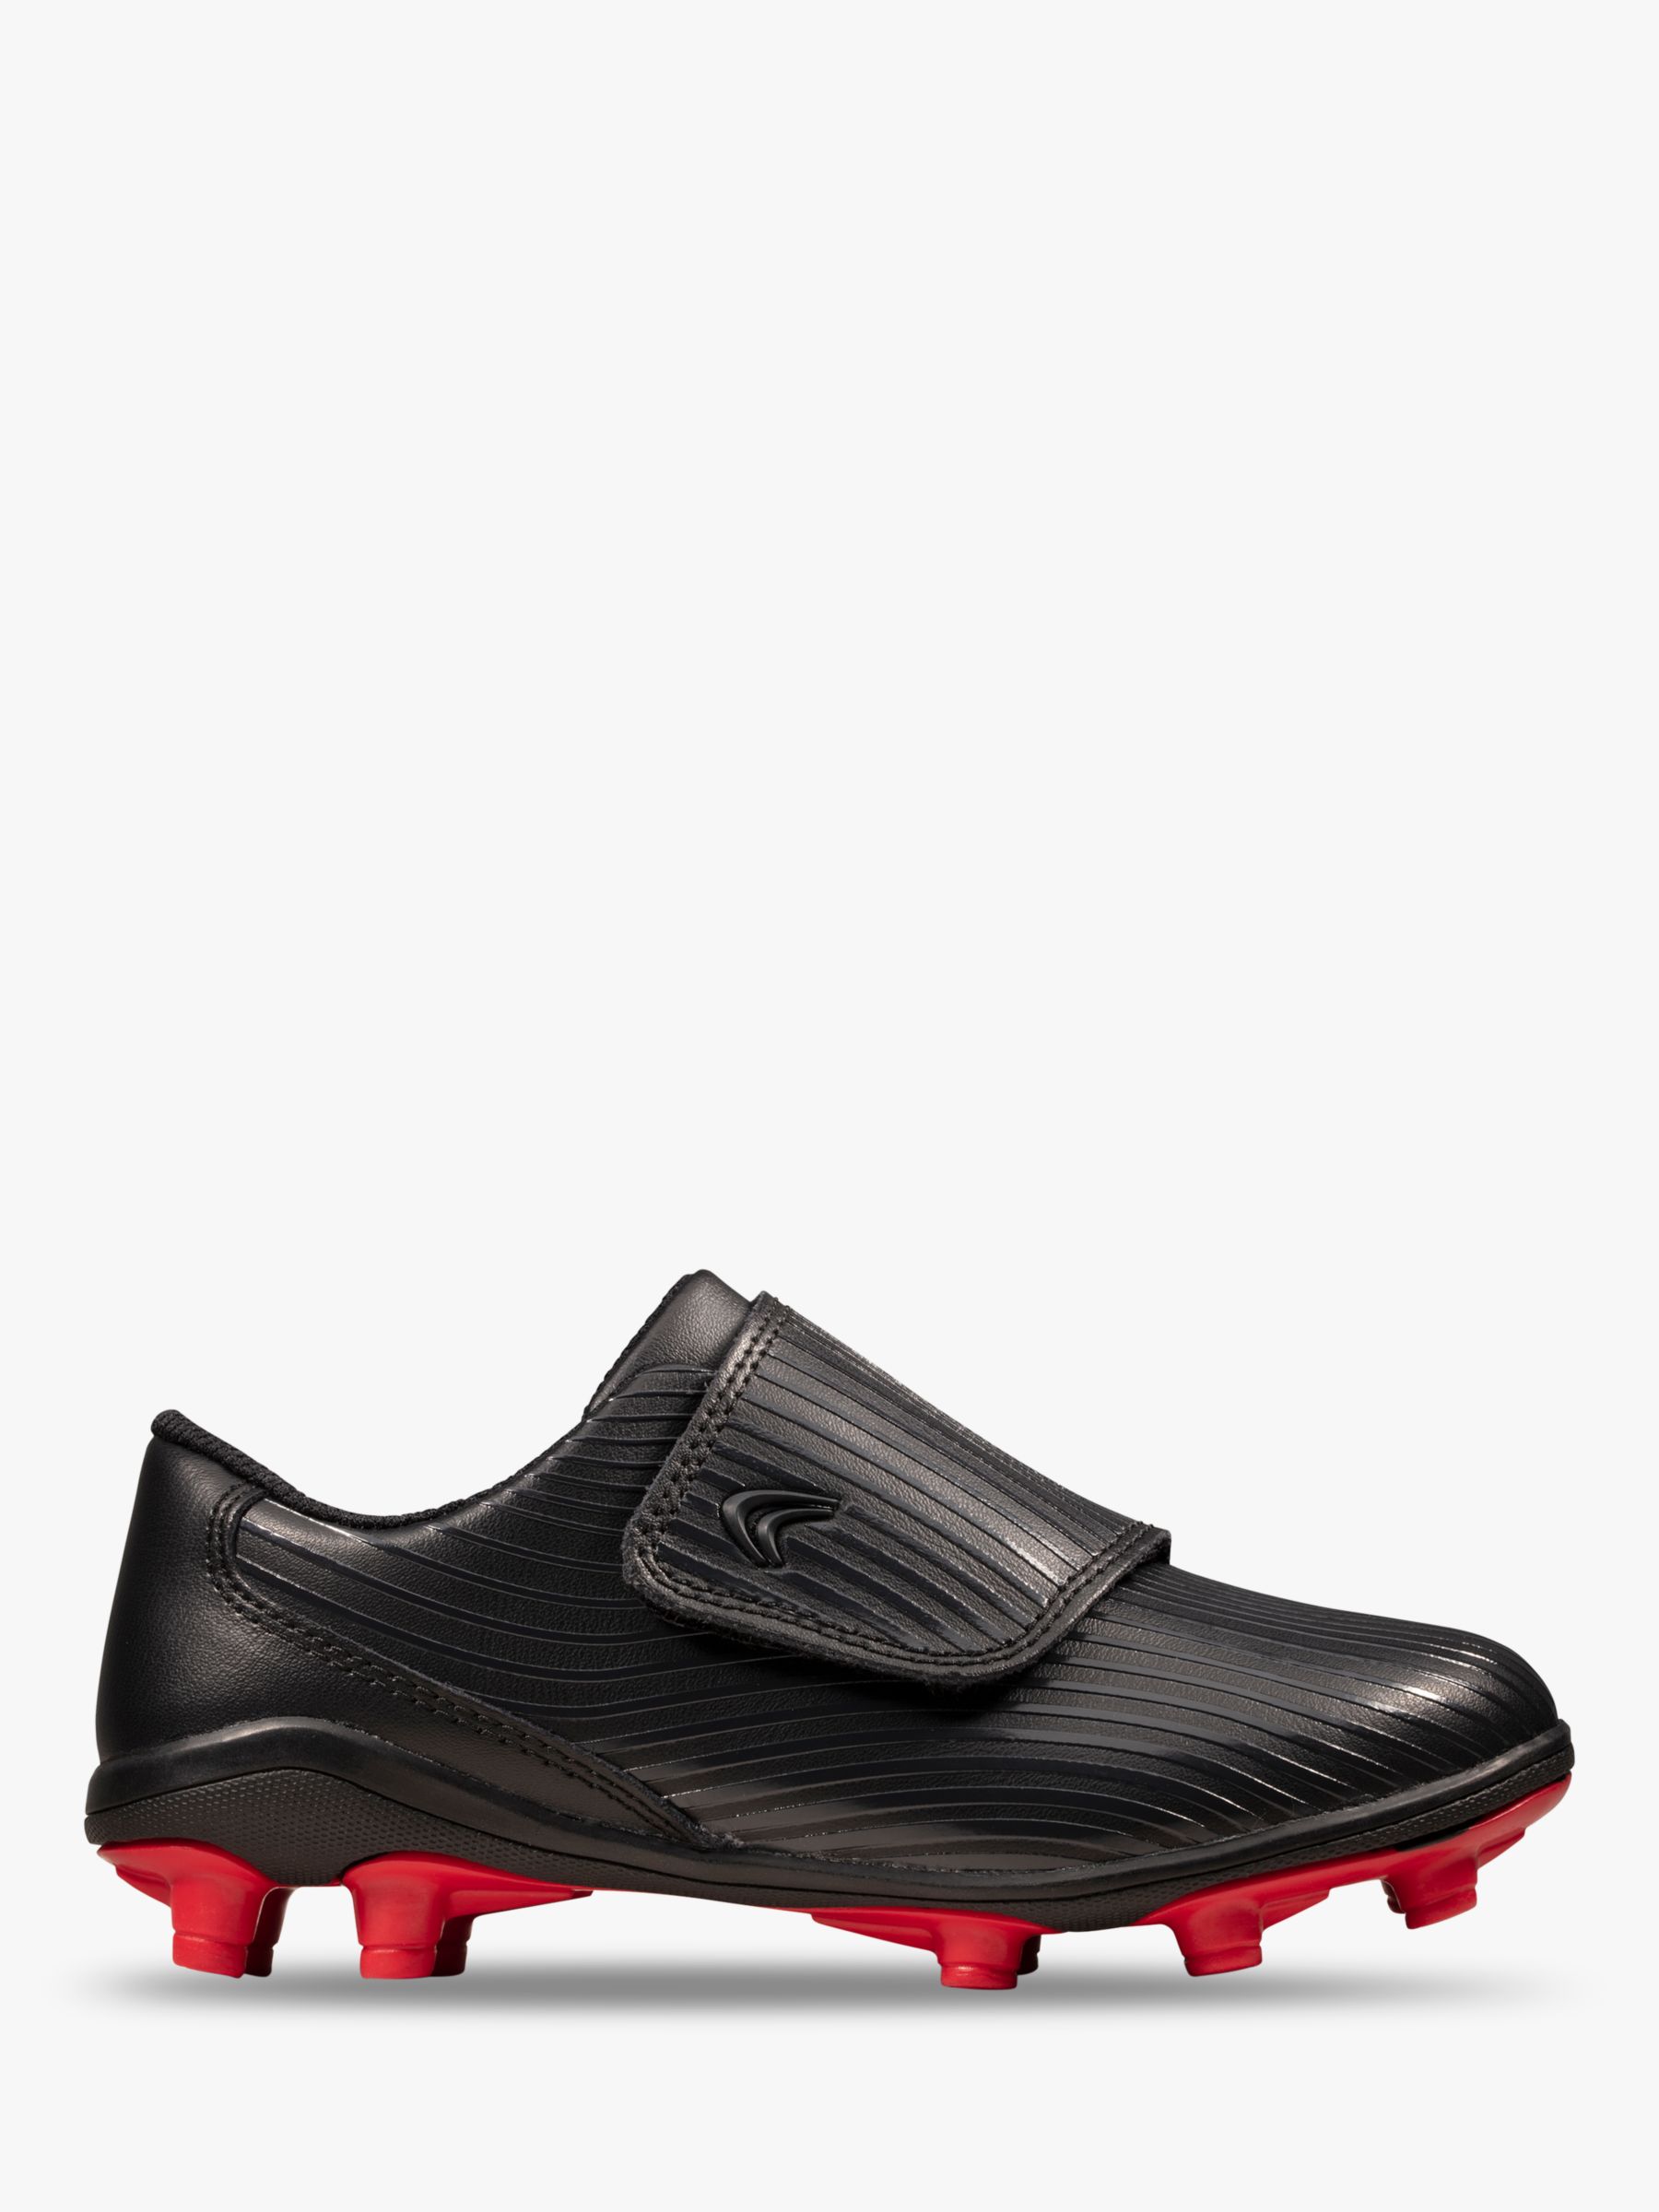 clarks studded football boots